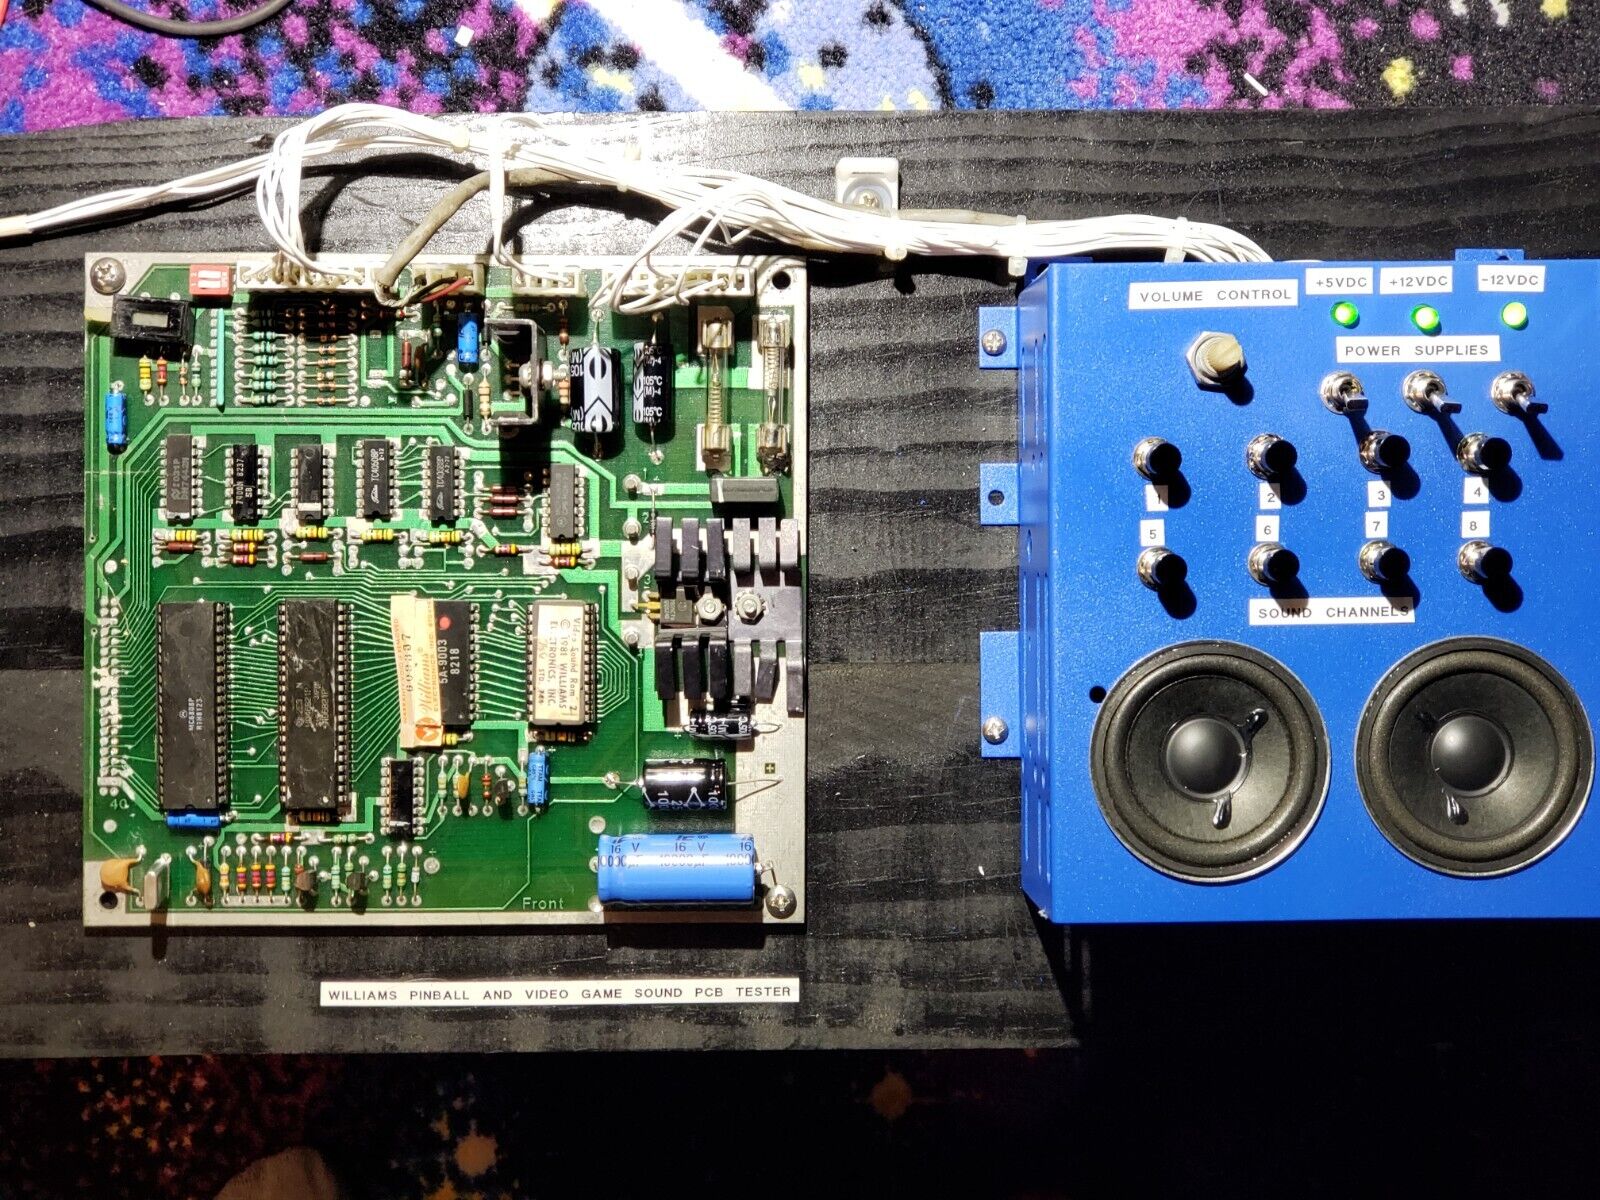 Williams Defender Arcade sound PCB board repair and refurb service